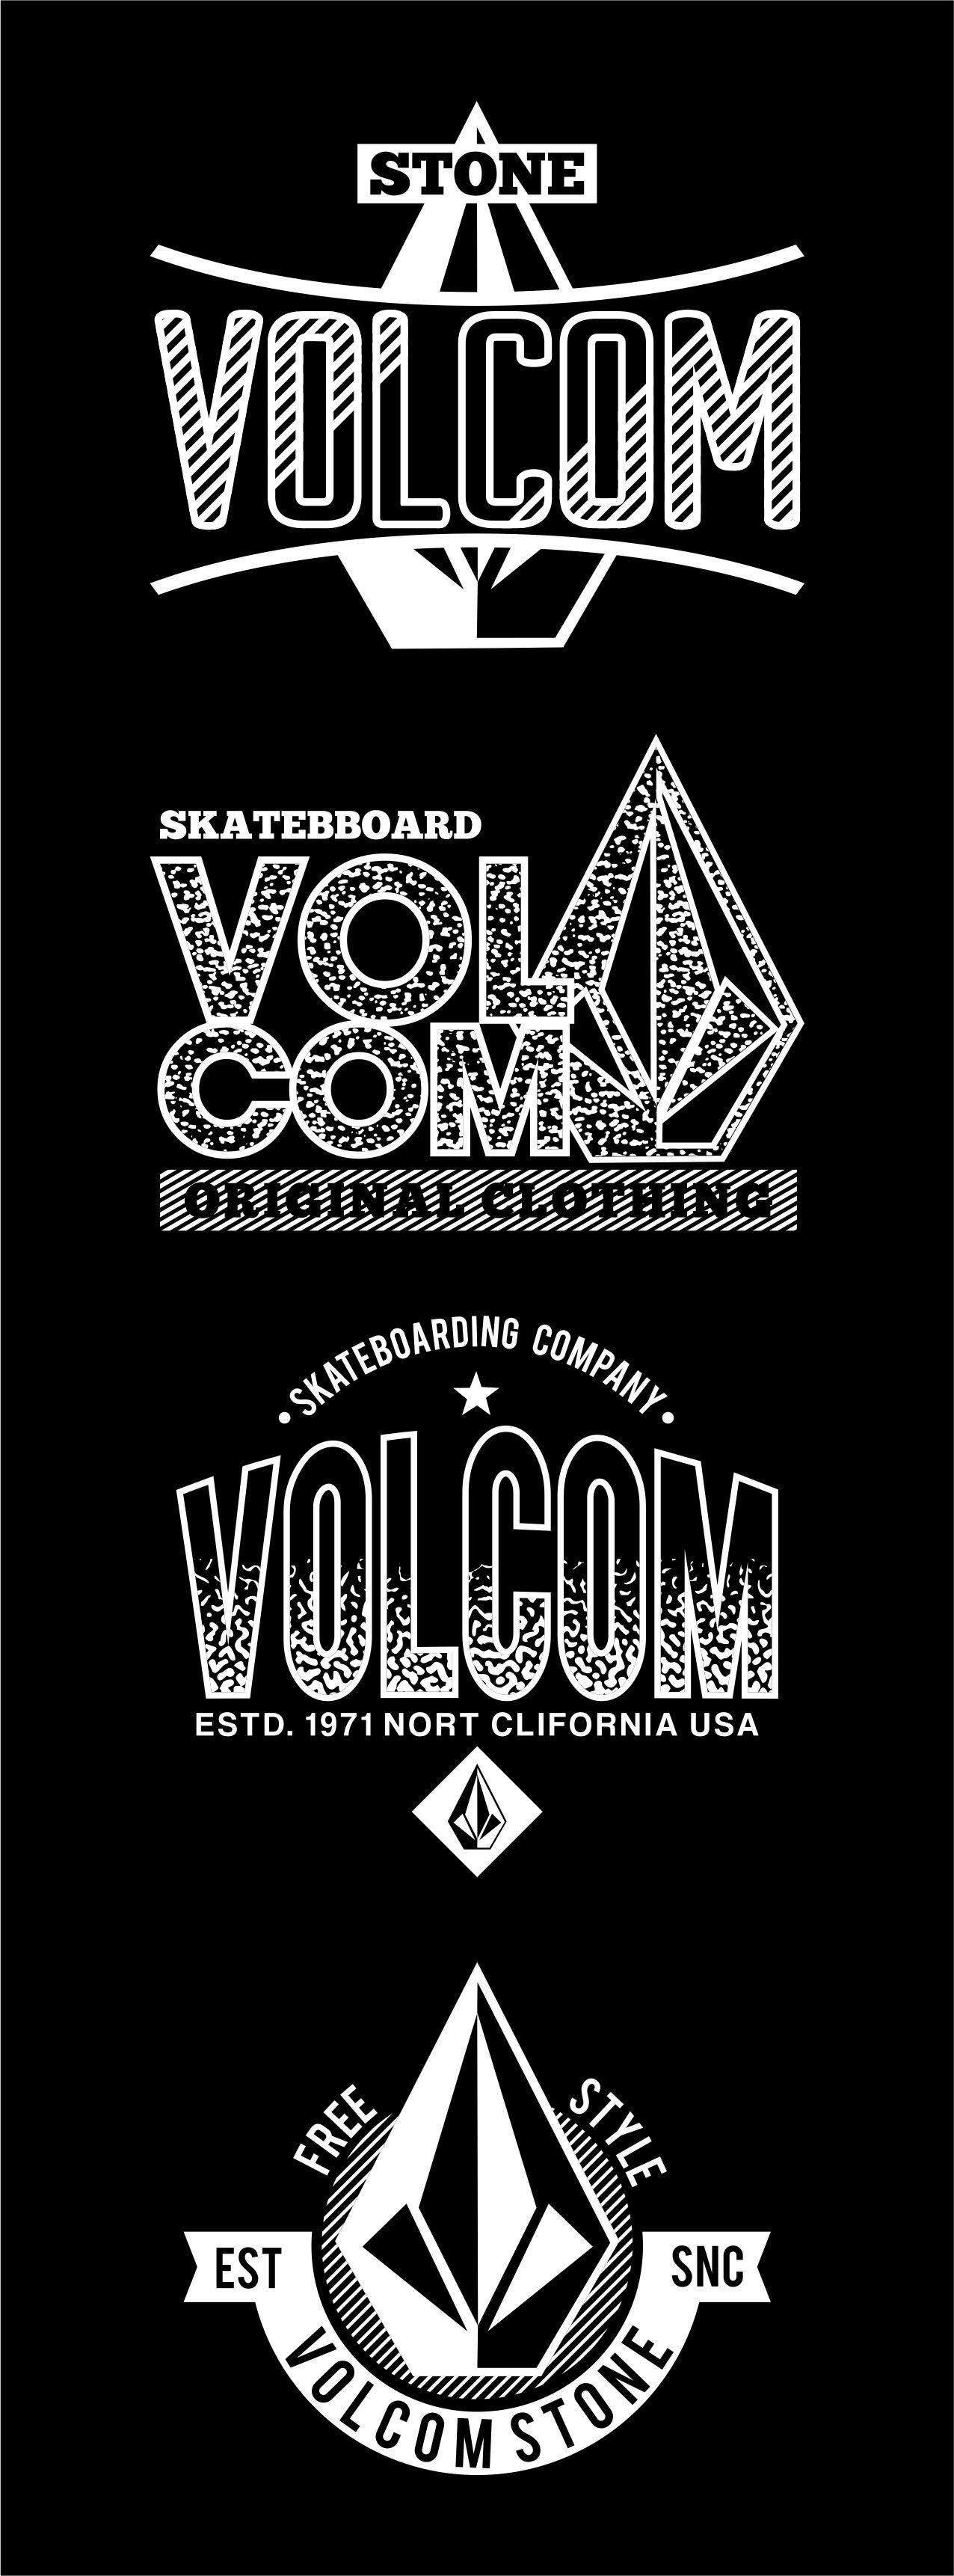 Volcom 壁紙 壁紙 Volcom ロゴ あなたのための最高の壁紙画像